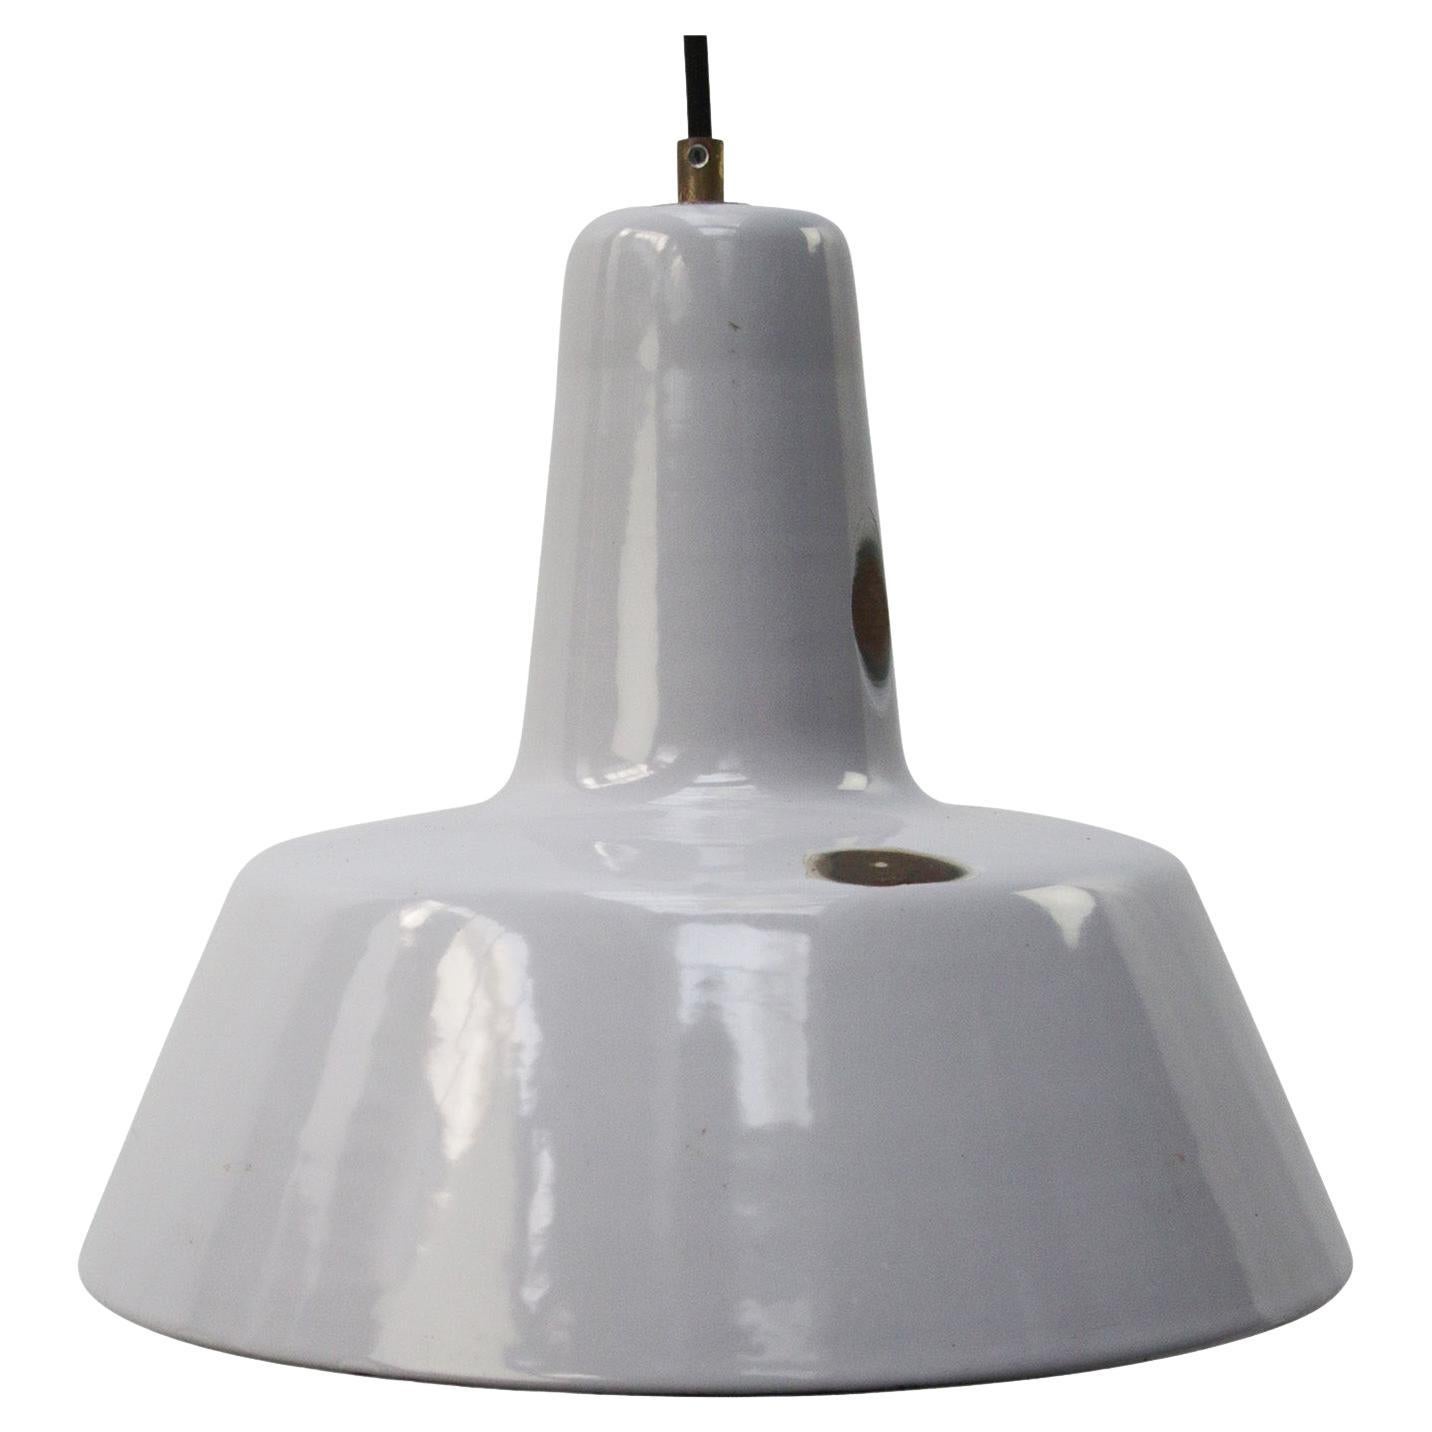 Vintage Dutch Industrial Grey Enamel Hanging Lamps Pendants by Philips For Sale